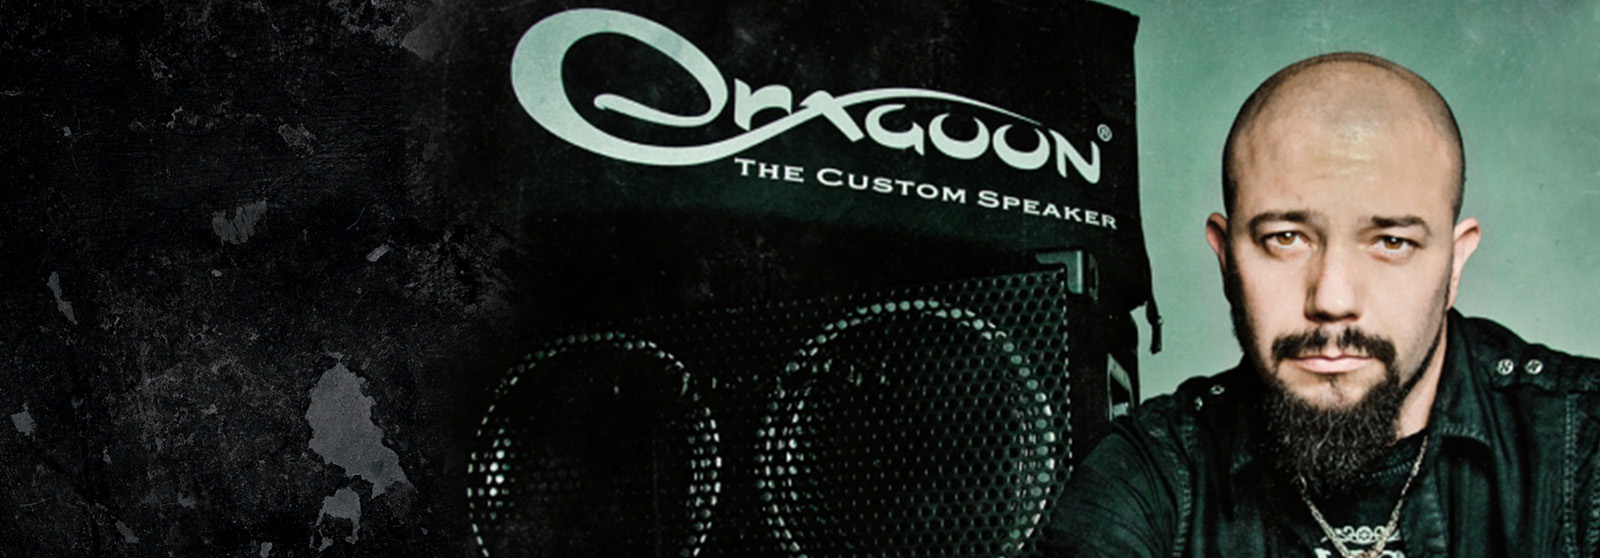 Dragoon - The Custom Speaker - GABRIELE-RUSTICHELLI_20160225225328602075.jpg